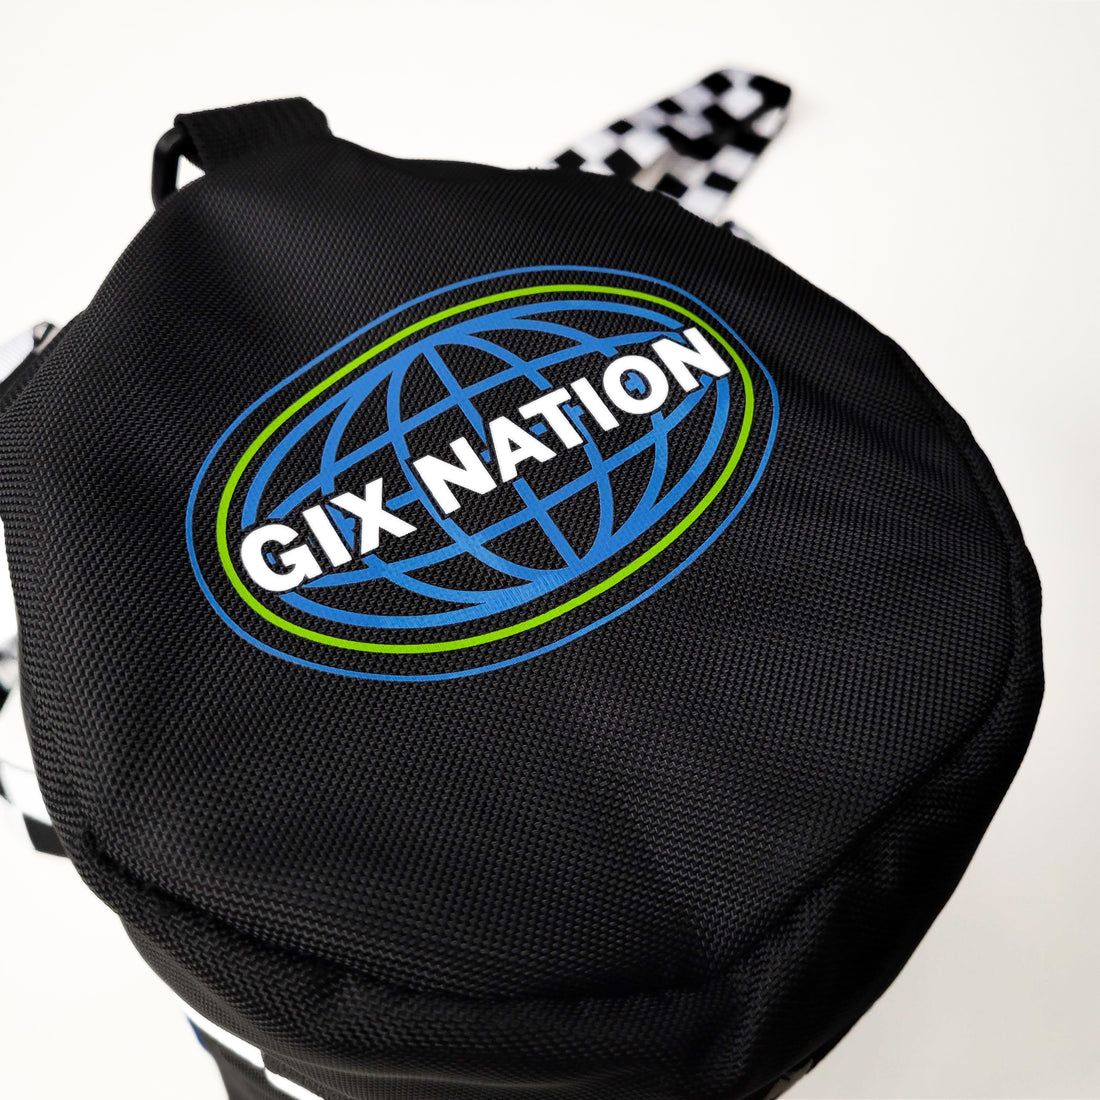 NOSTALGIX - GIX NATION RACER DUFFLE BAG